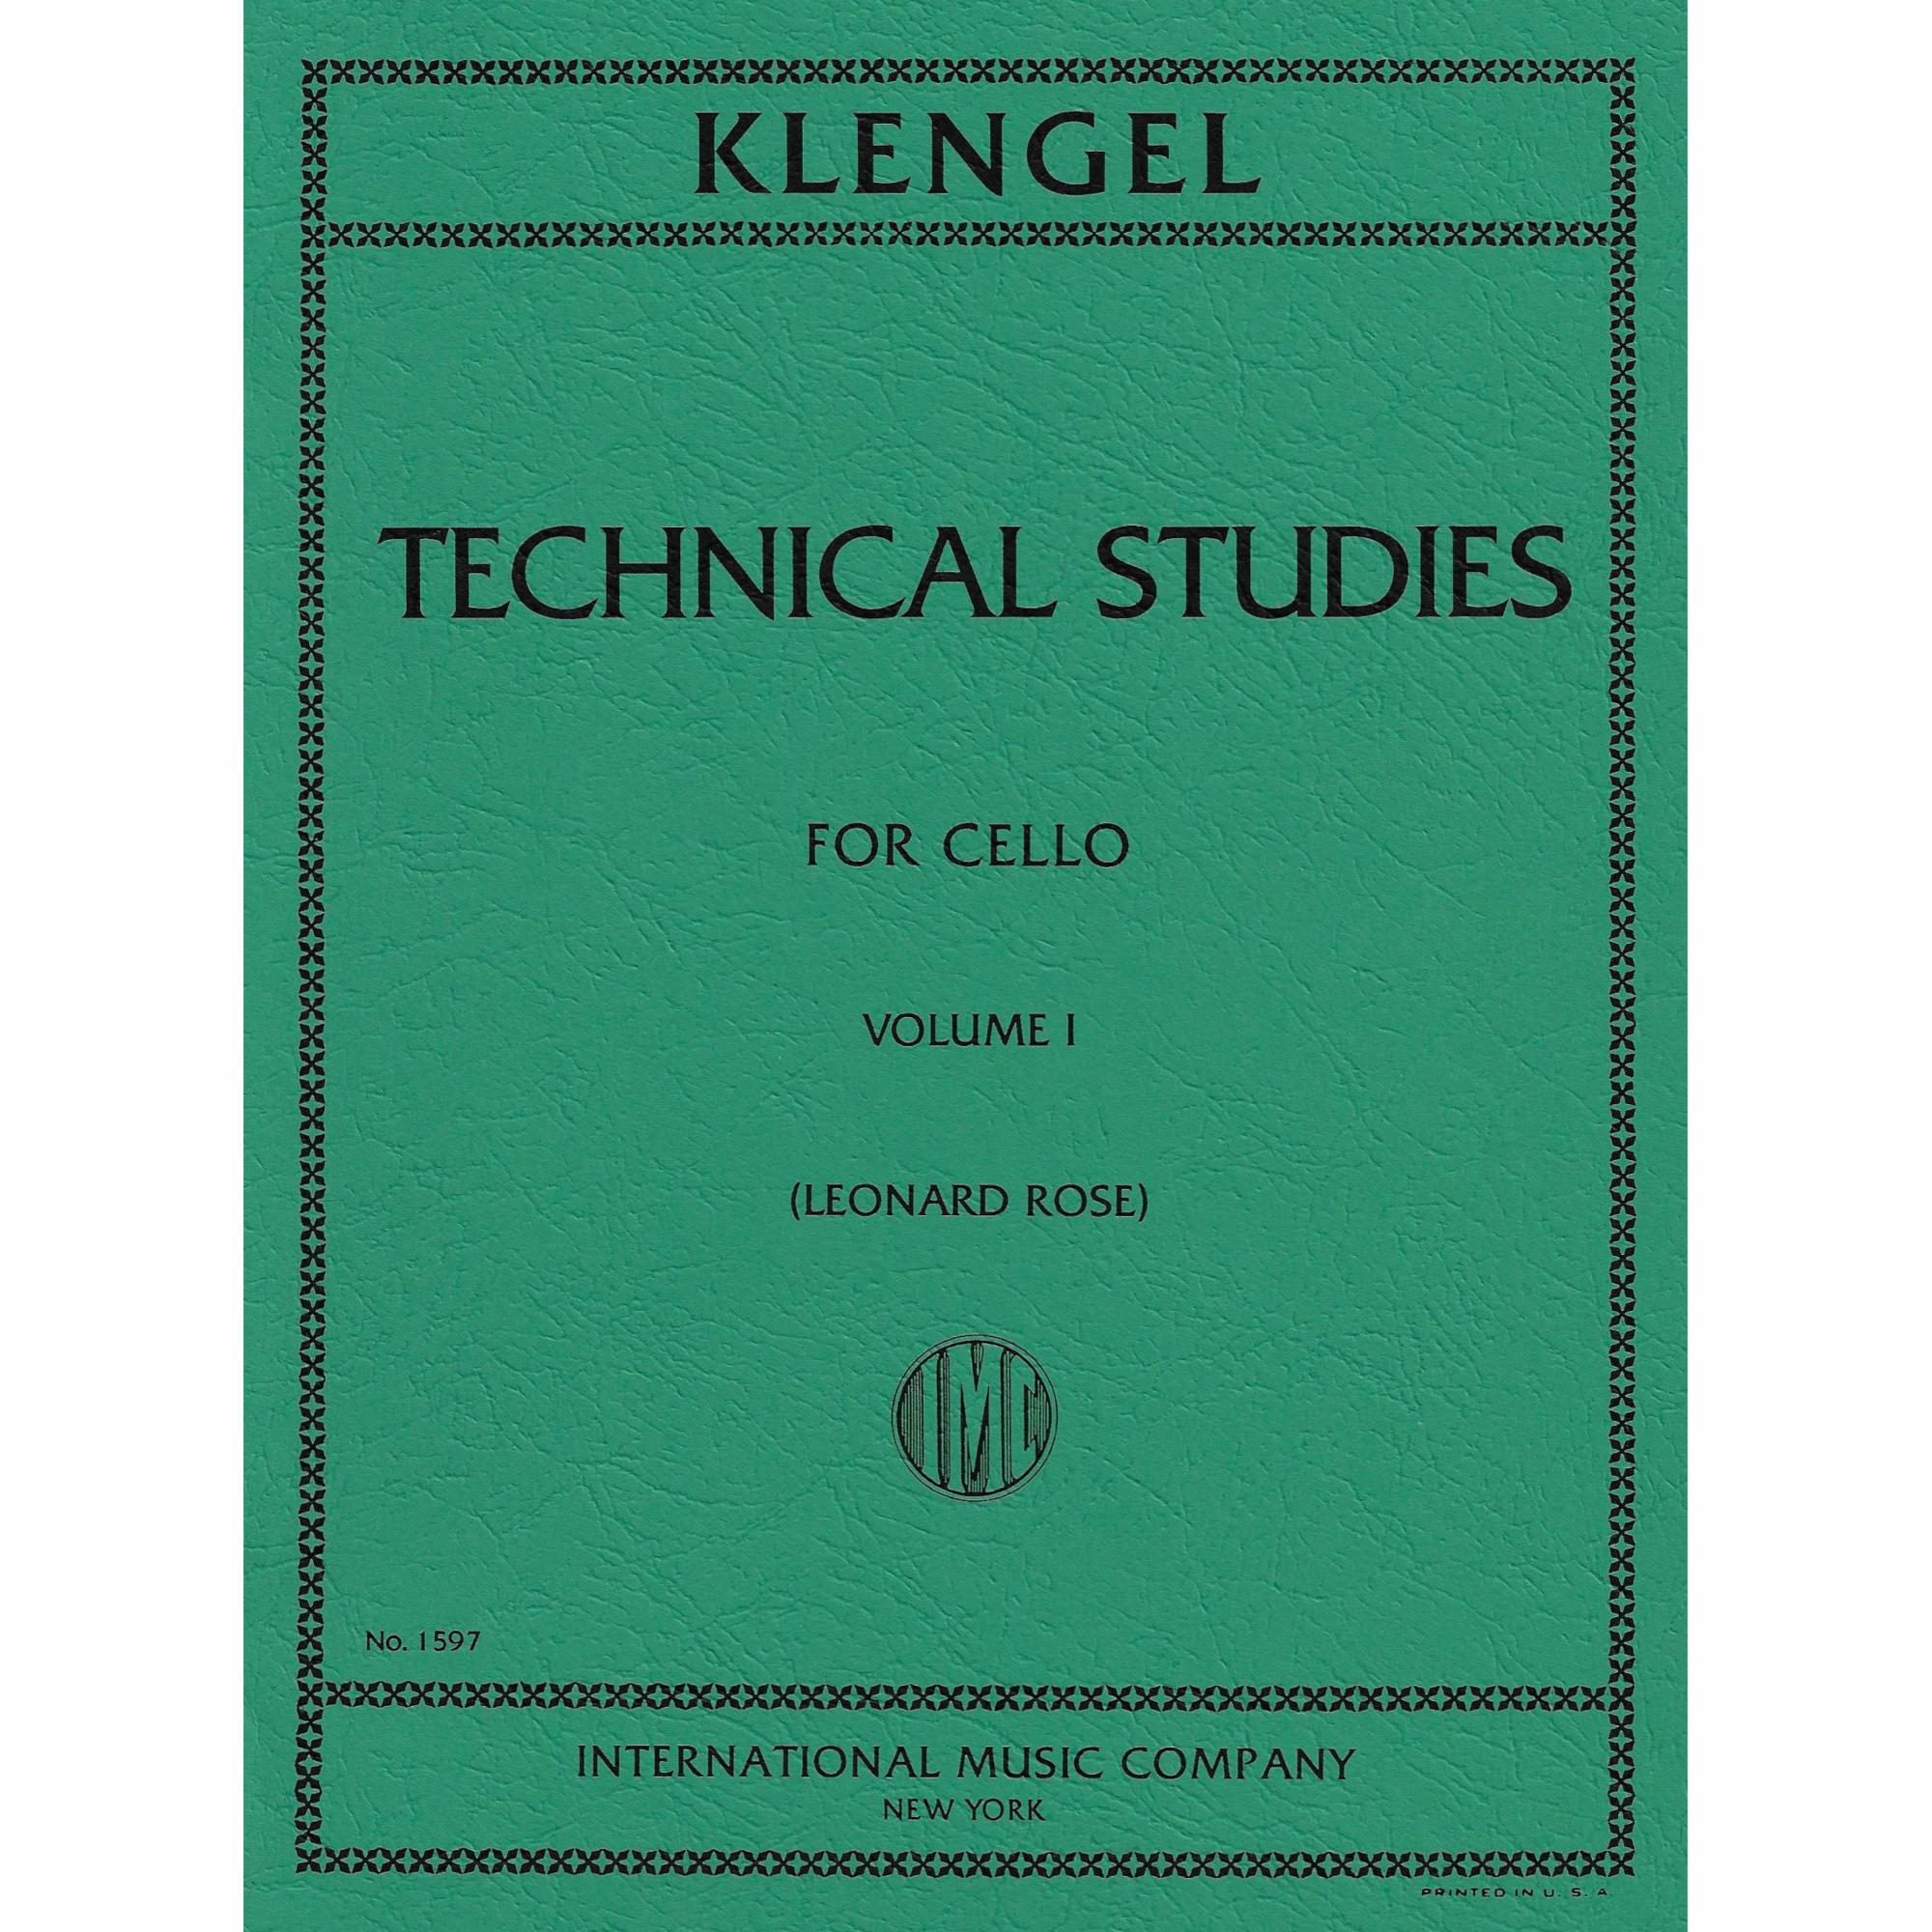 Klengel -- Technical Studies, Vols. I-II for Cello